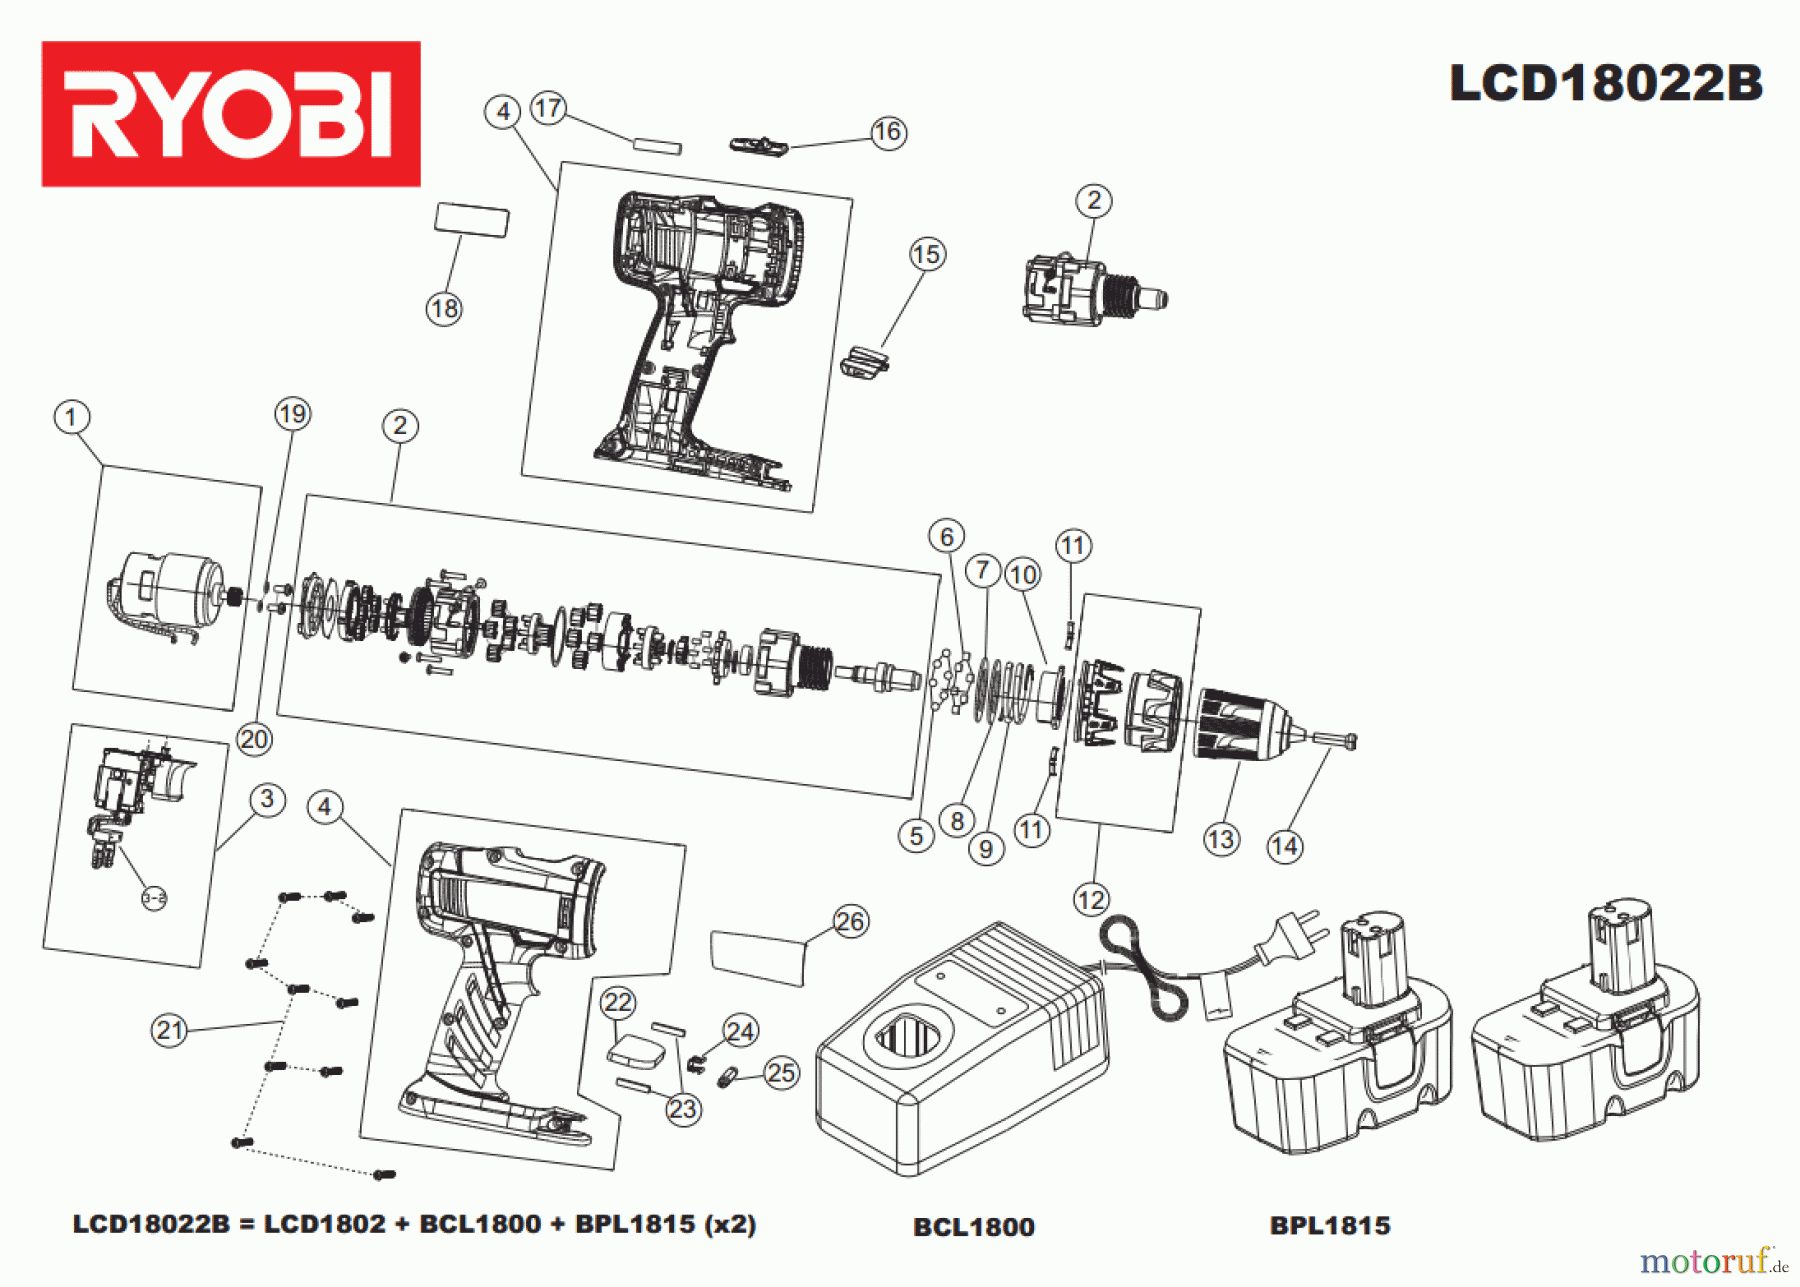  Ryobi (Schlag-)Bohrschrauber Bohrschrauber LCD18022B Seite 1